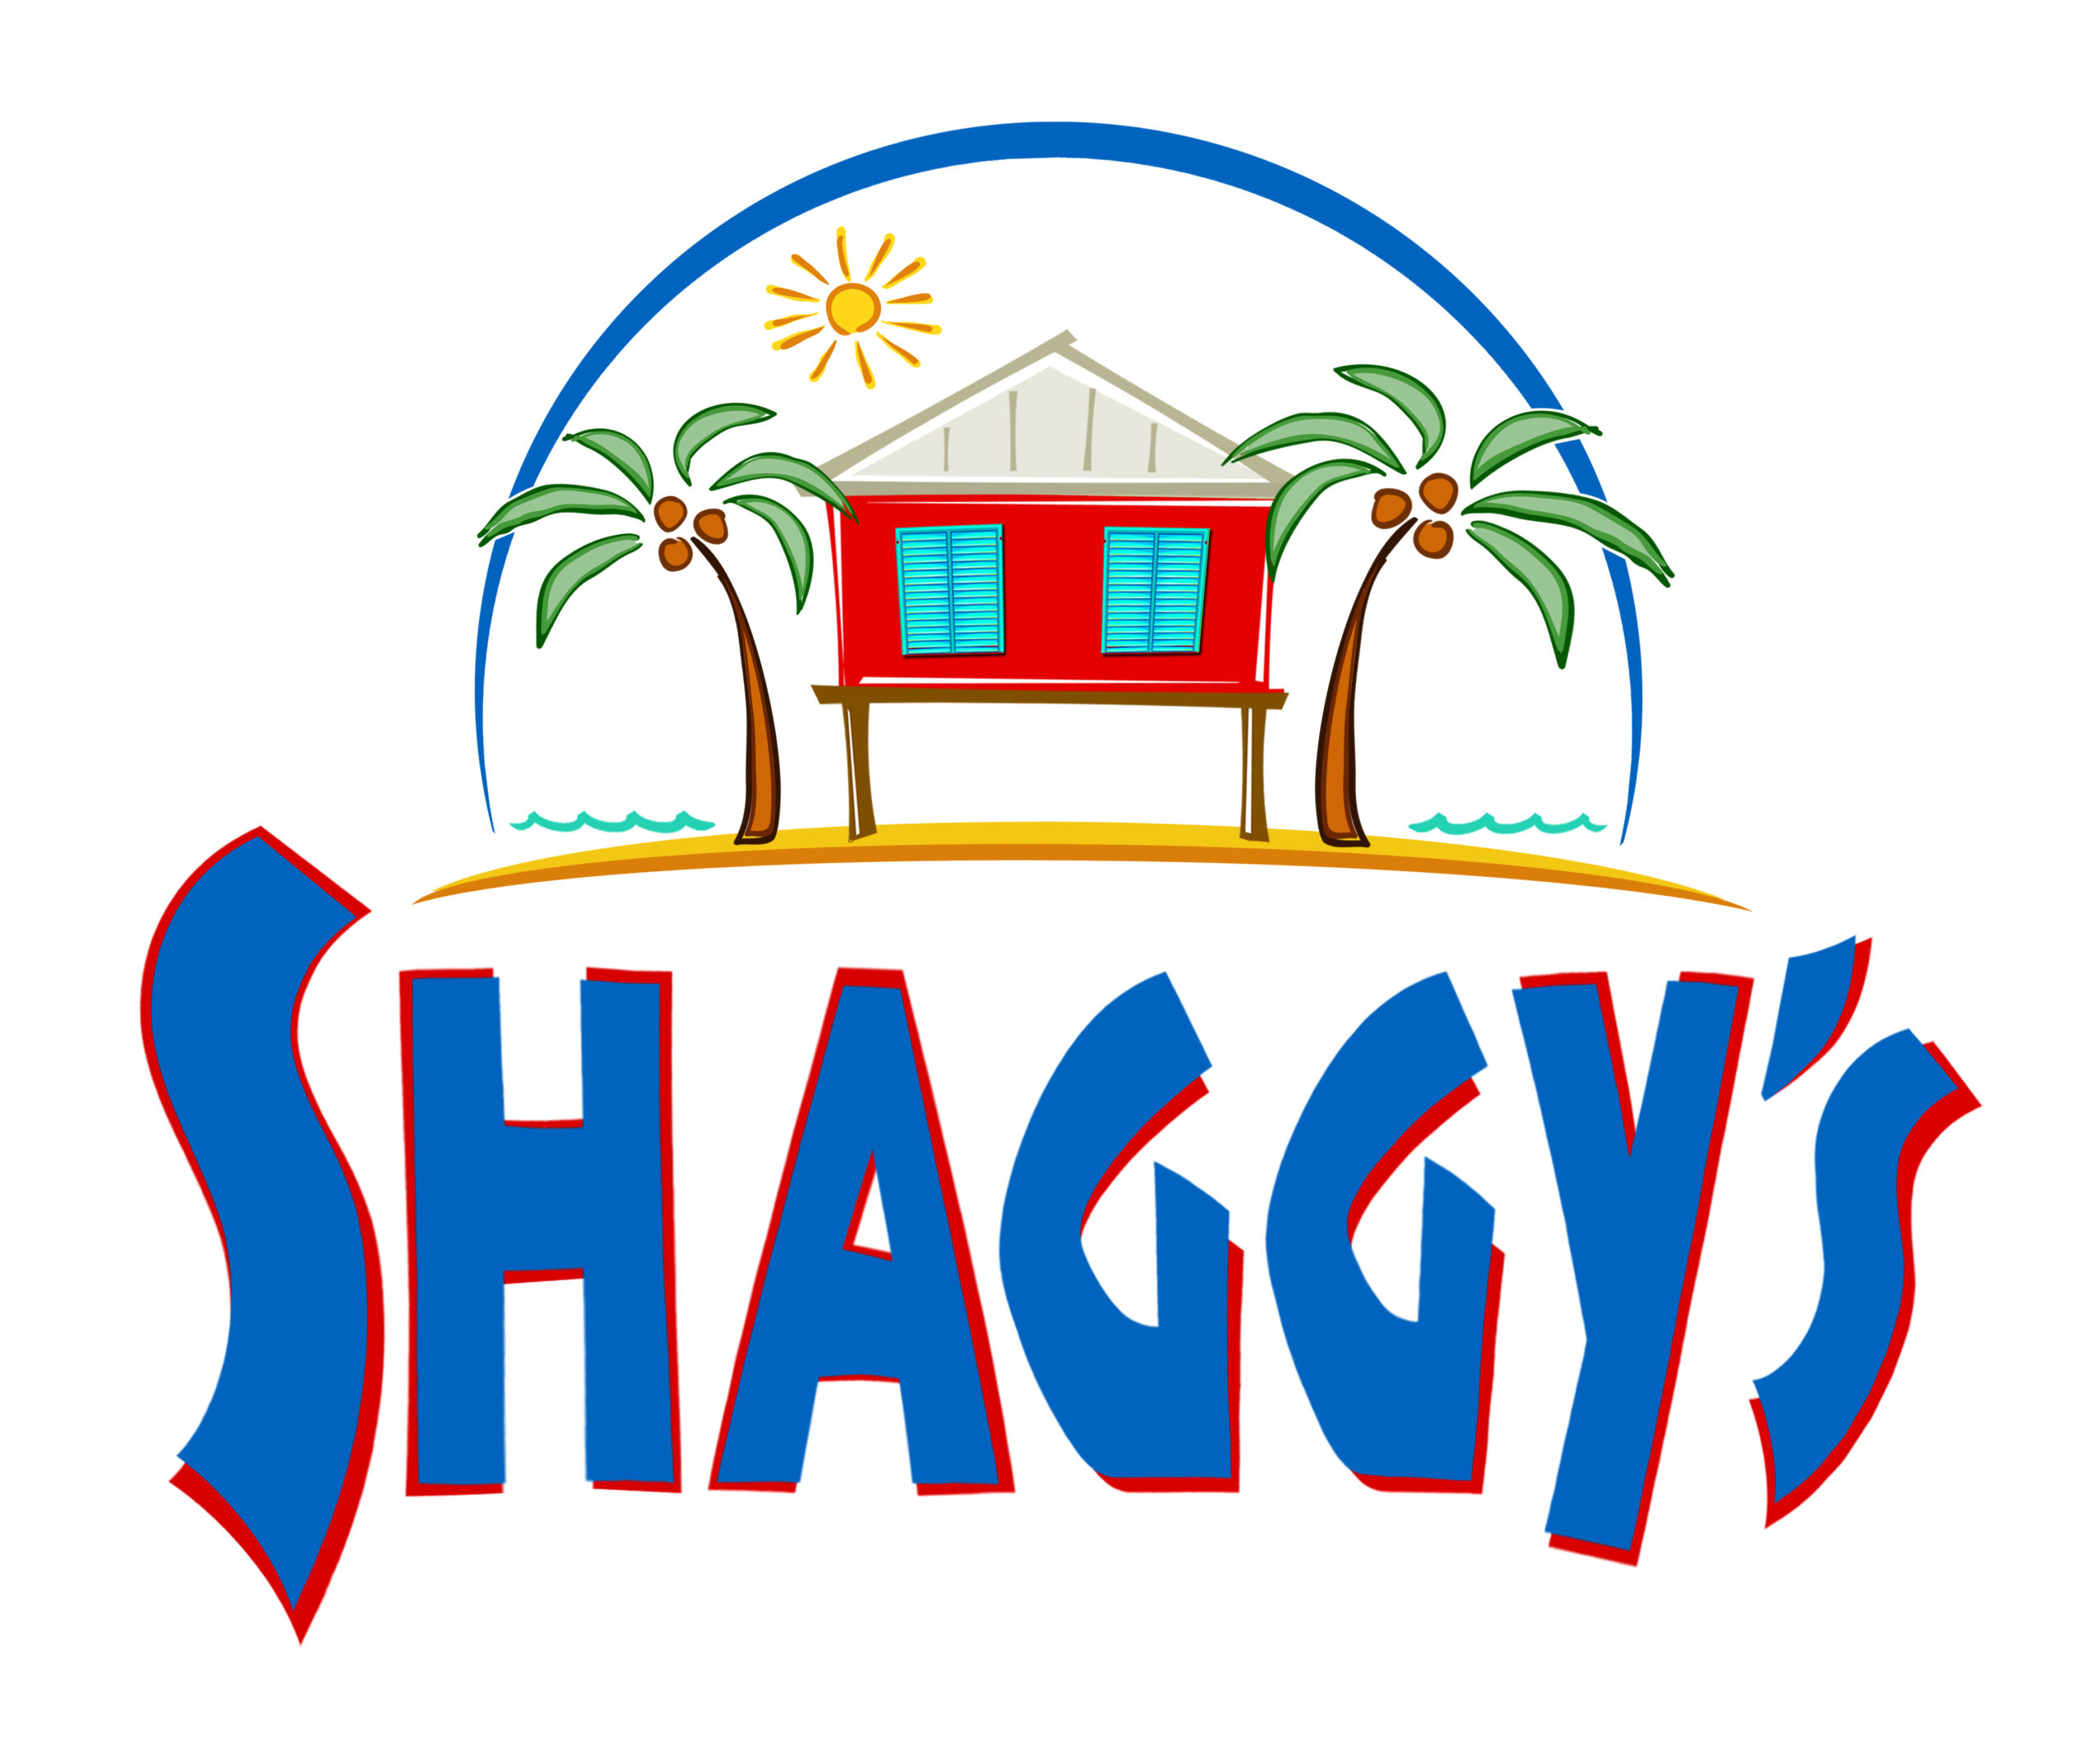 Shaggys-graphic-logo